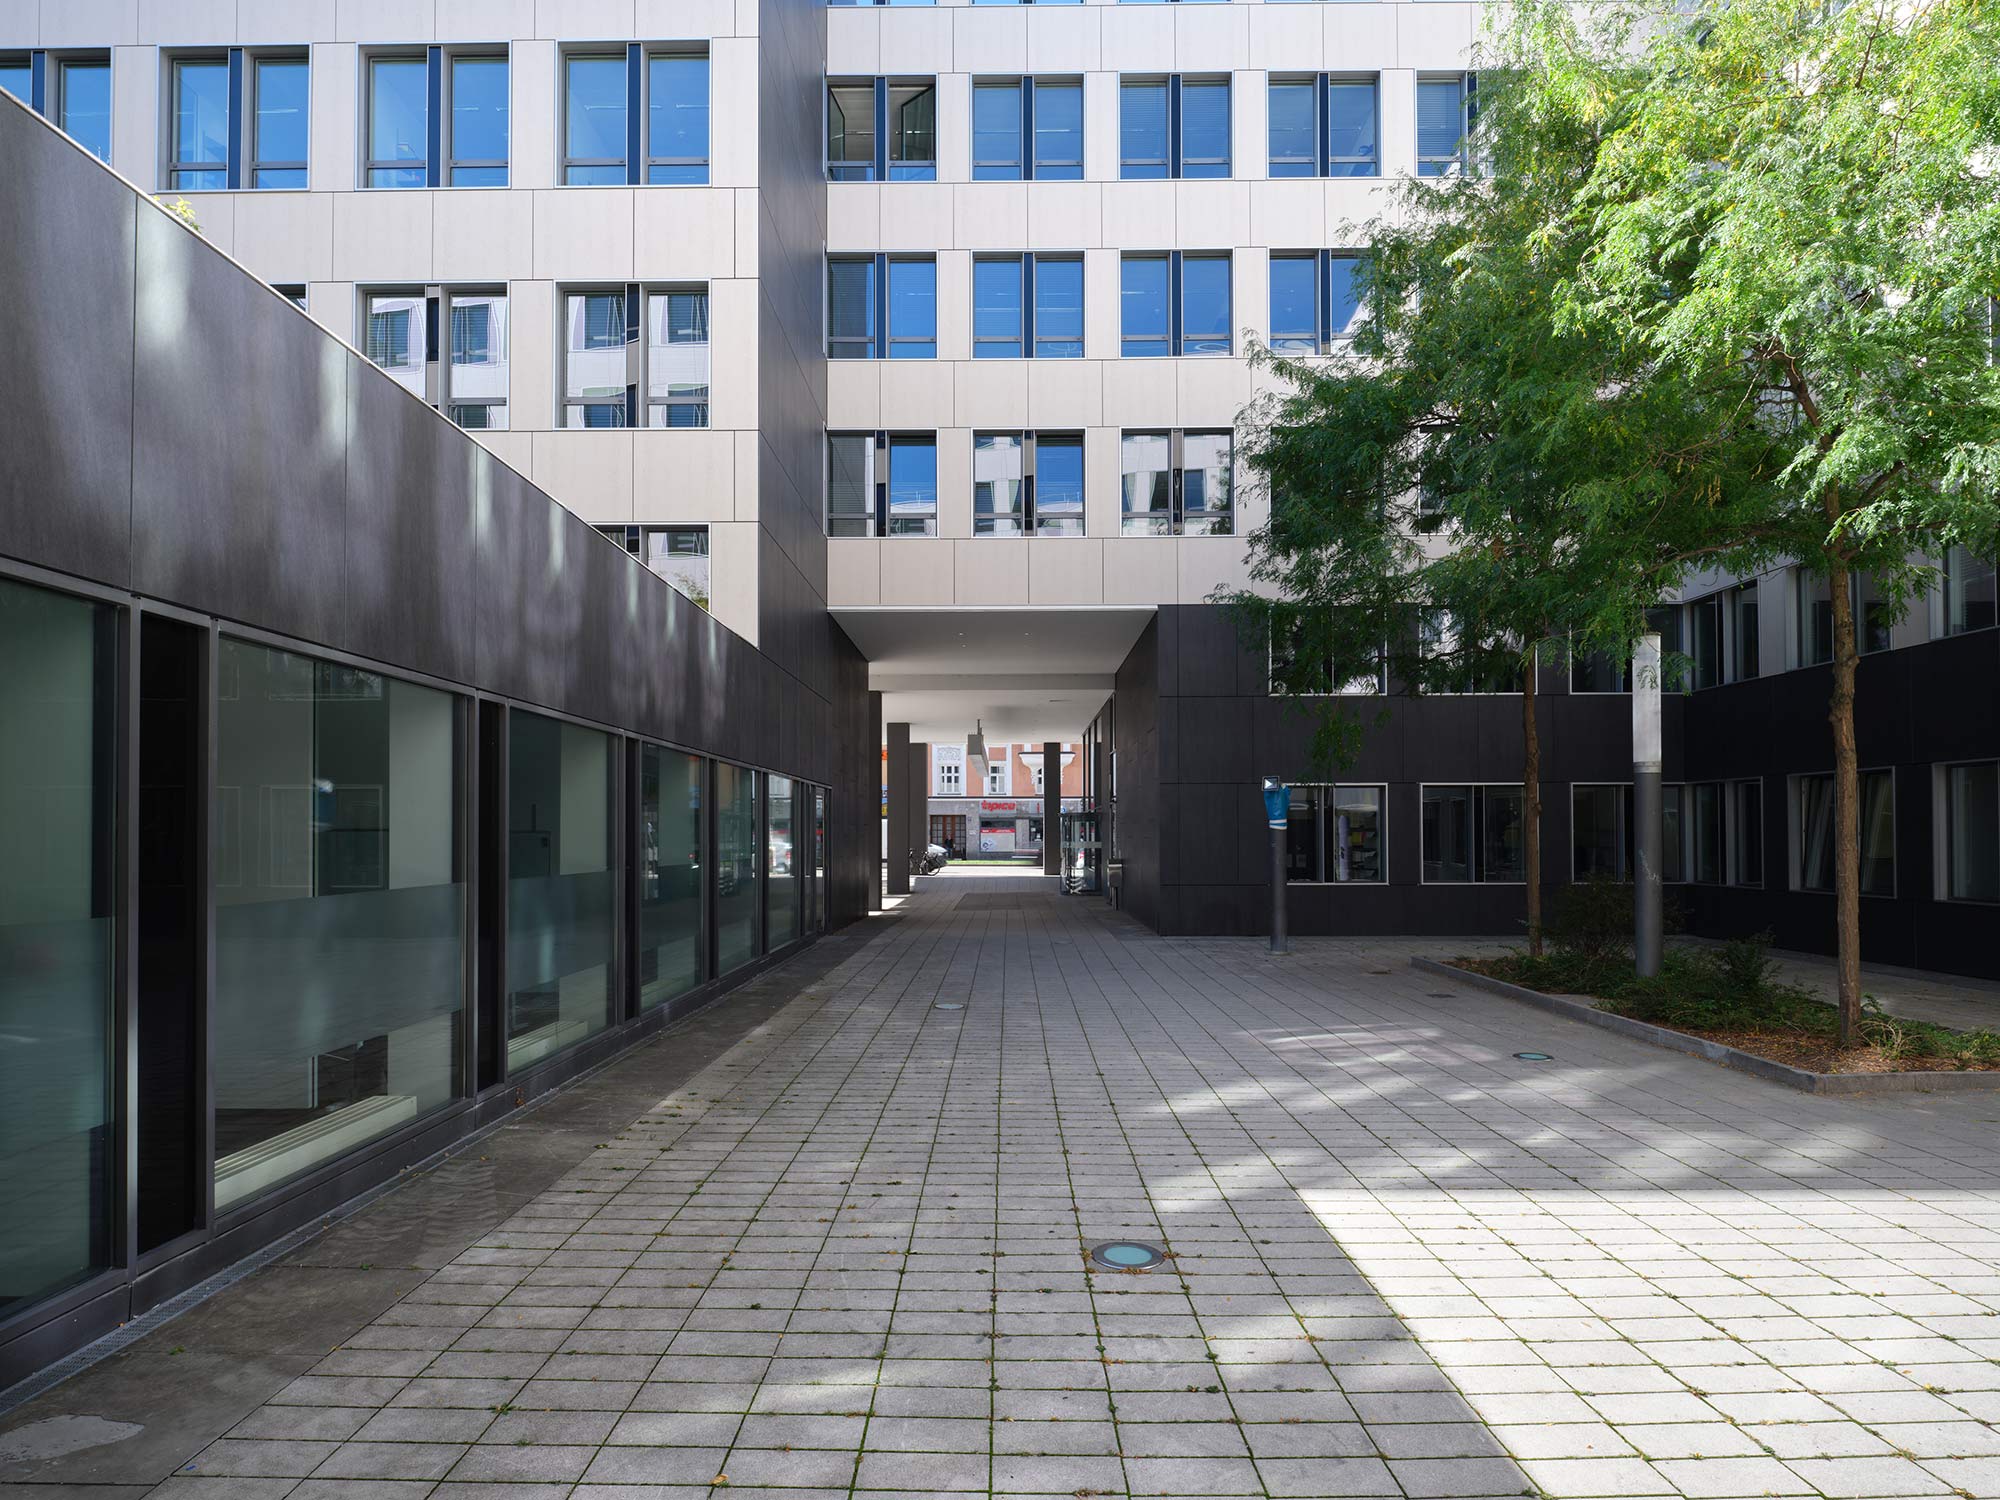 Image of Fachada office building Munich in Dekton: Surprisingly versatile exterior application - Cosentino